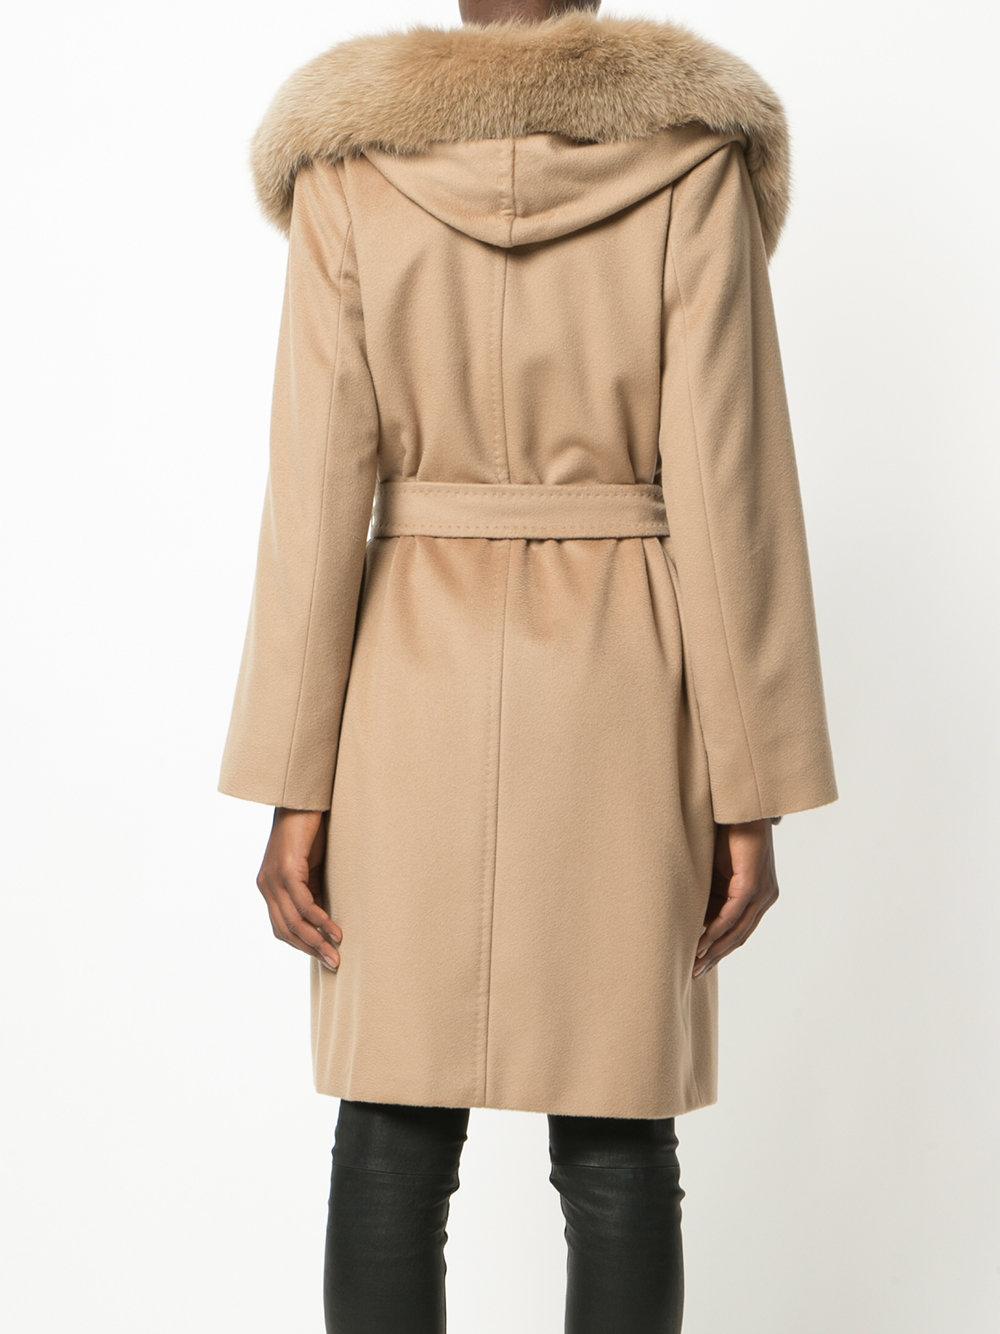 Max Mara Studio Wool Fur Trim Hooded Coat in Brown - Lyst